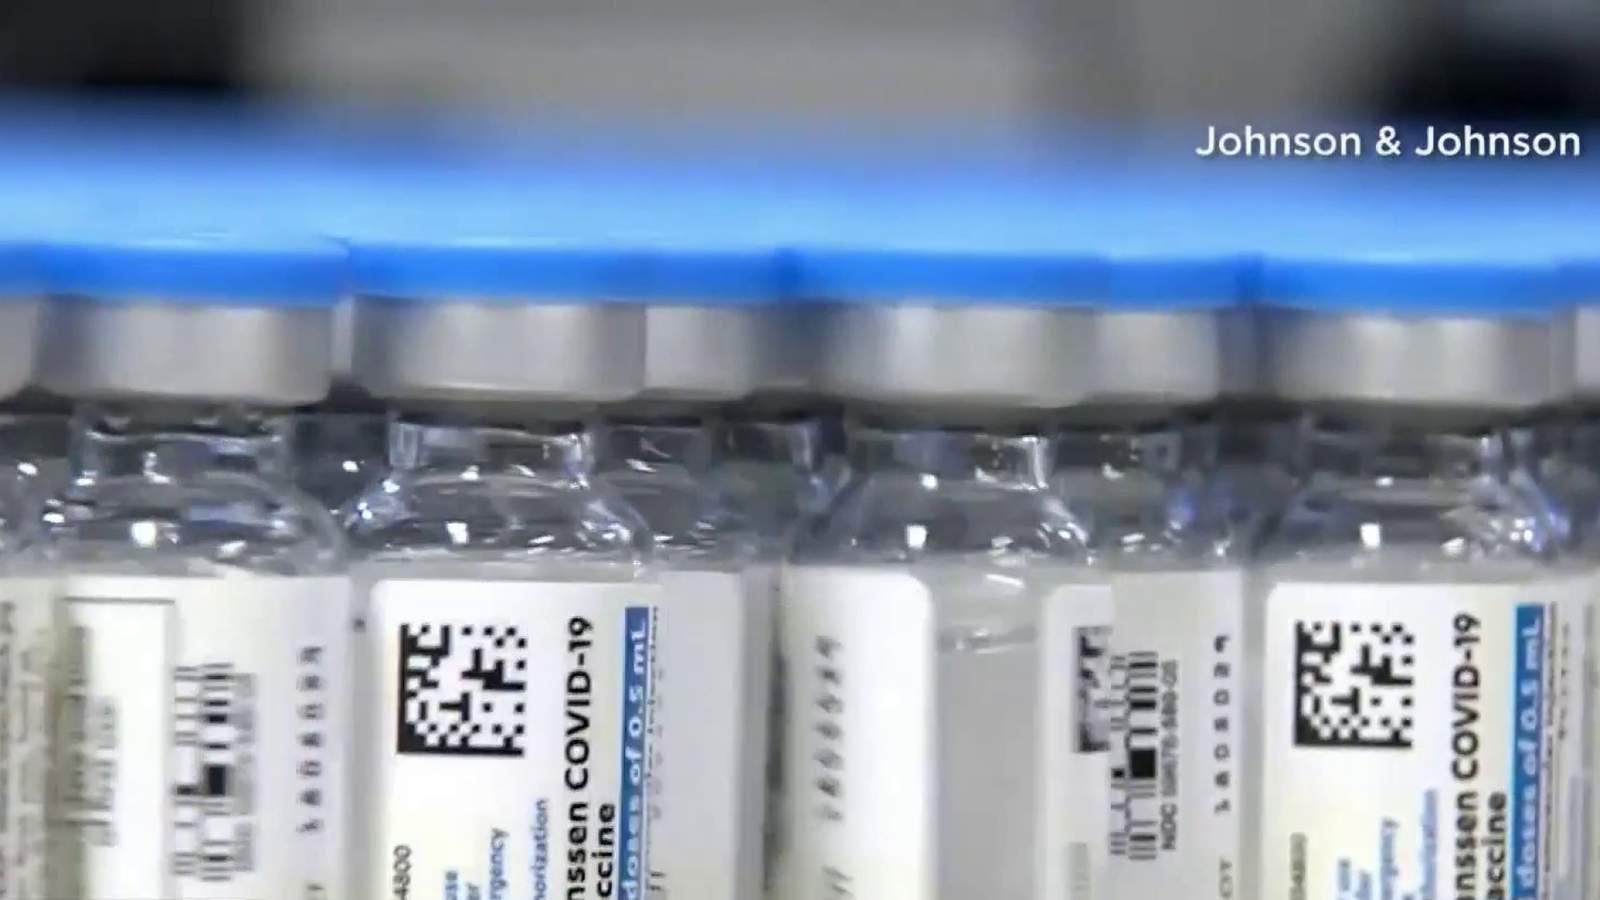 FDA says pause of Johnson & Johnson COVID-19 vaccine to investigate rare clots to last ‘matter of days’